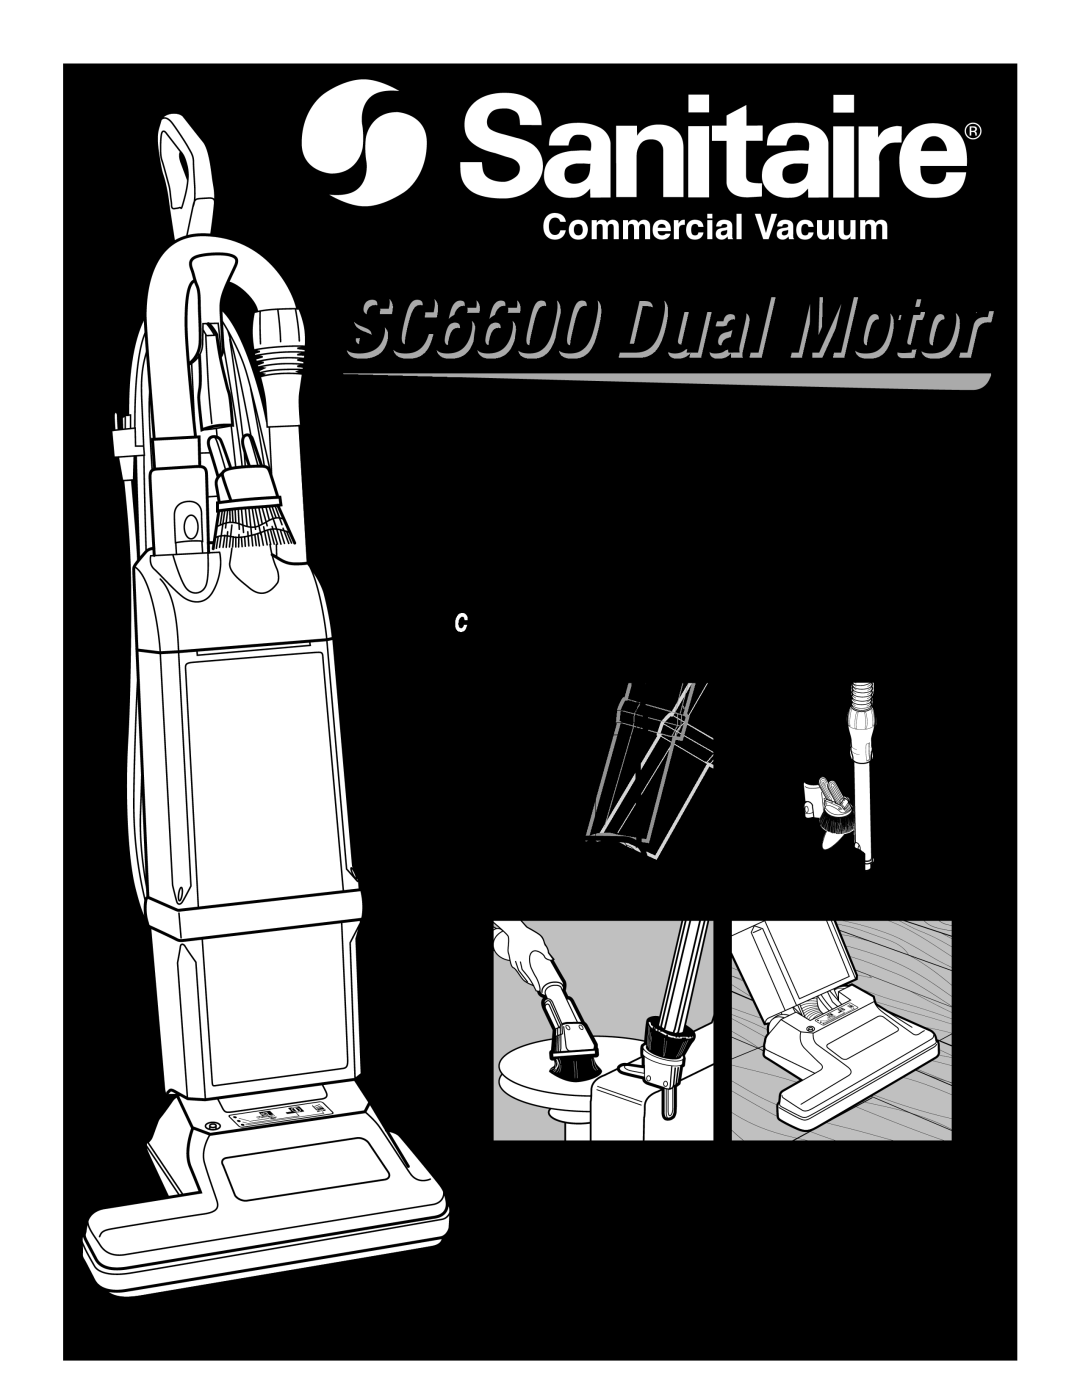 Sanitaire manual Vacuum Performance Sensors And Onboard Tools, Y Herramientas Sobre El Tablero, SC6600 Dual Motor 